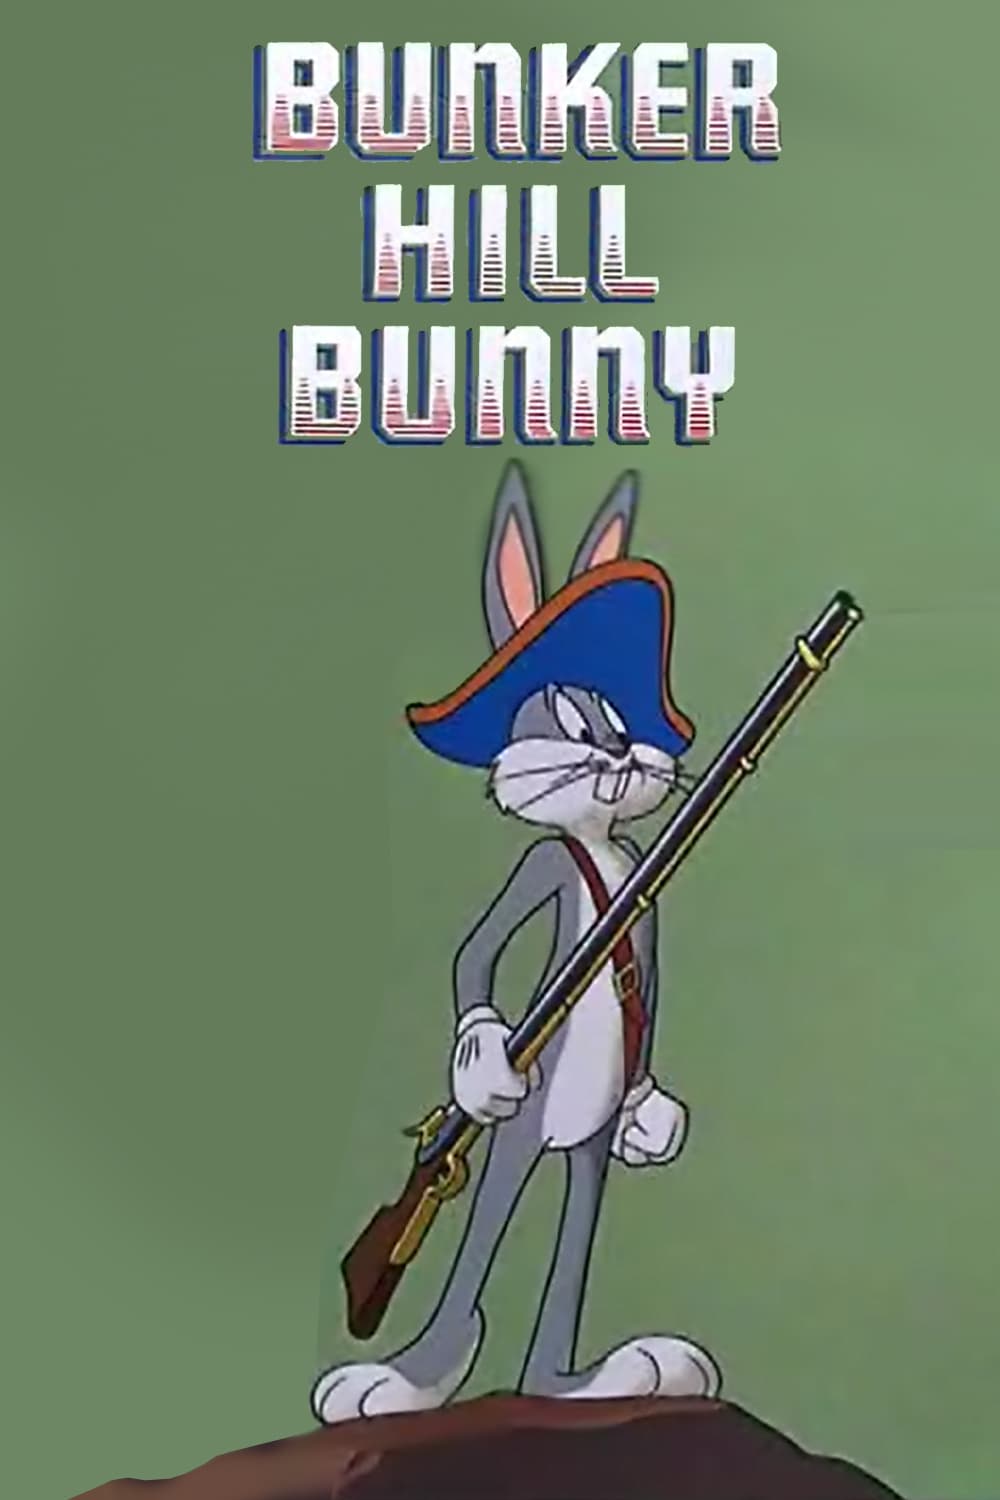 Bunker Hill Bunny (1950)